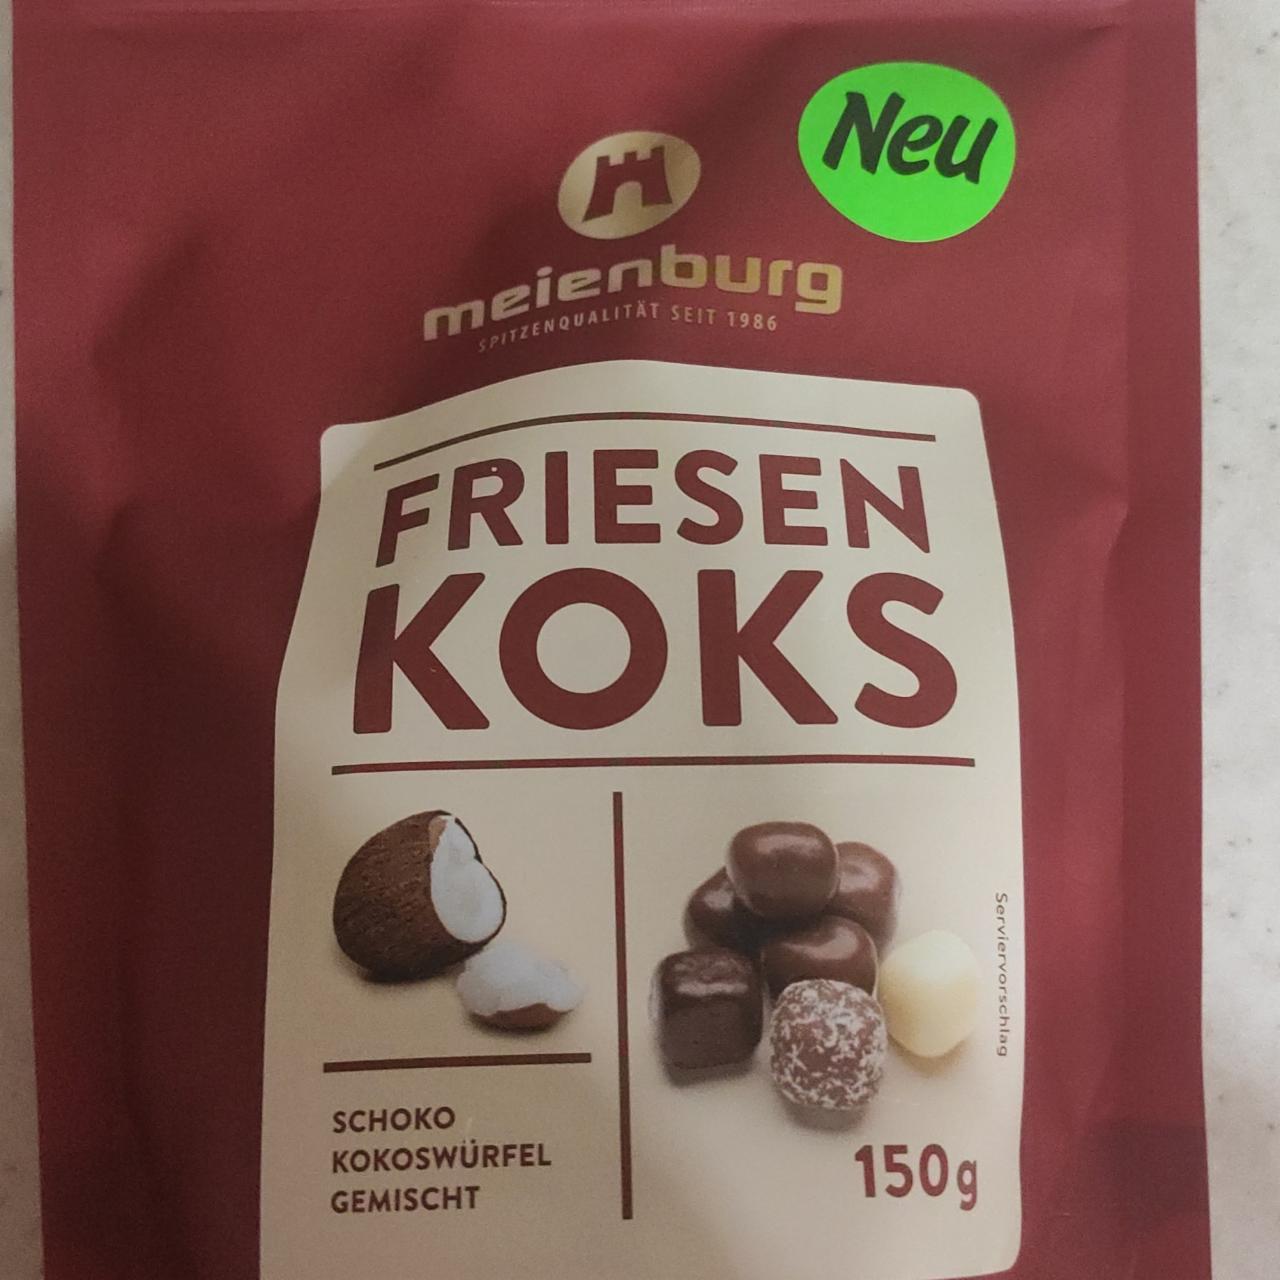 Фото - Конфеты шоколадные Friesen Koks Meienburg